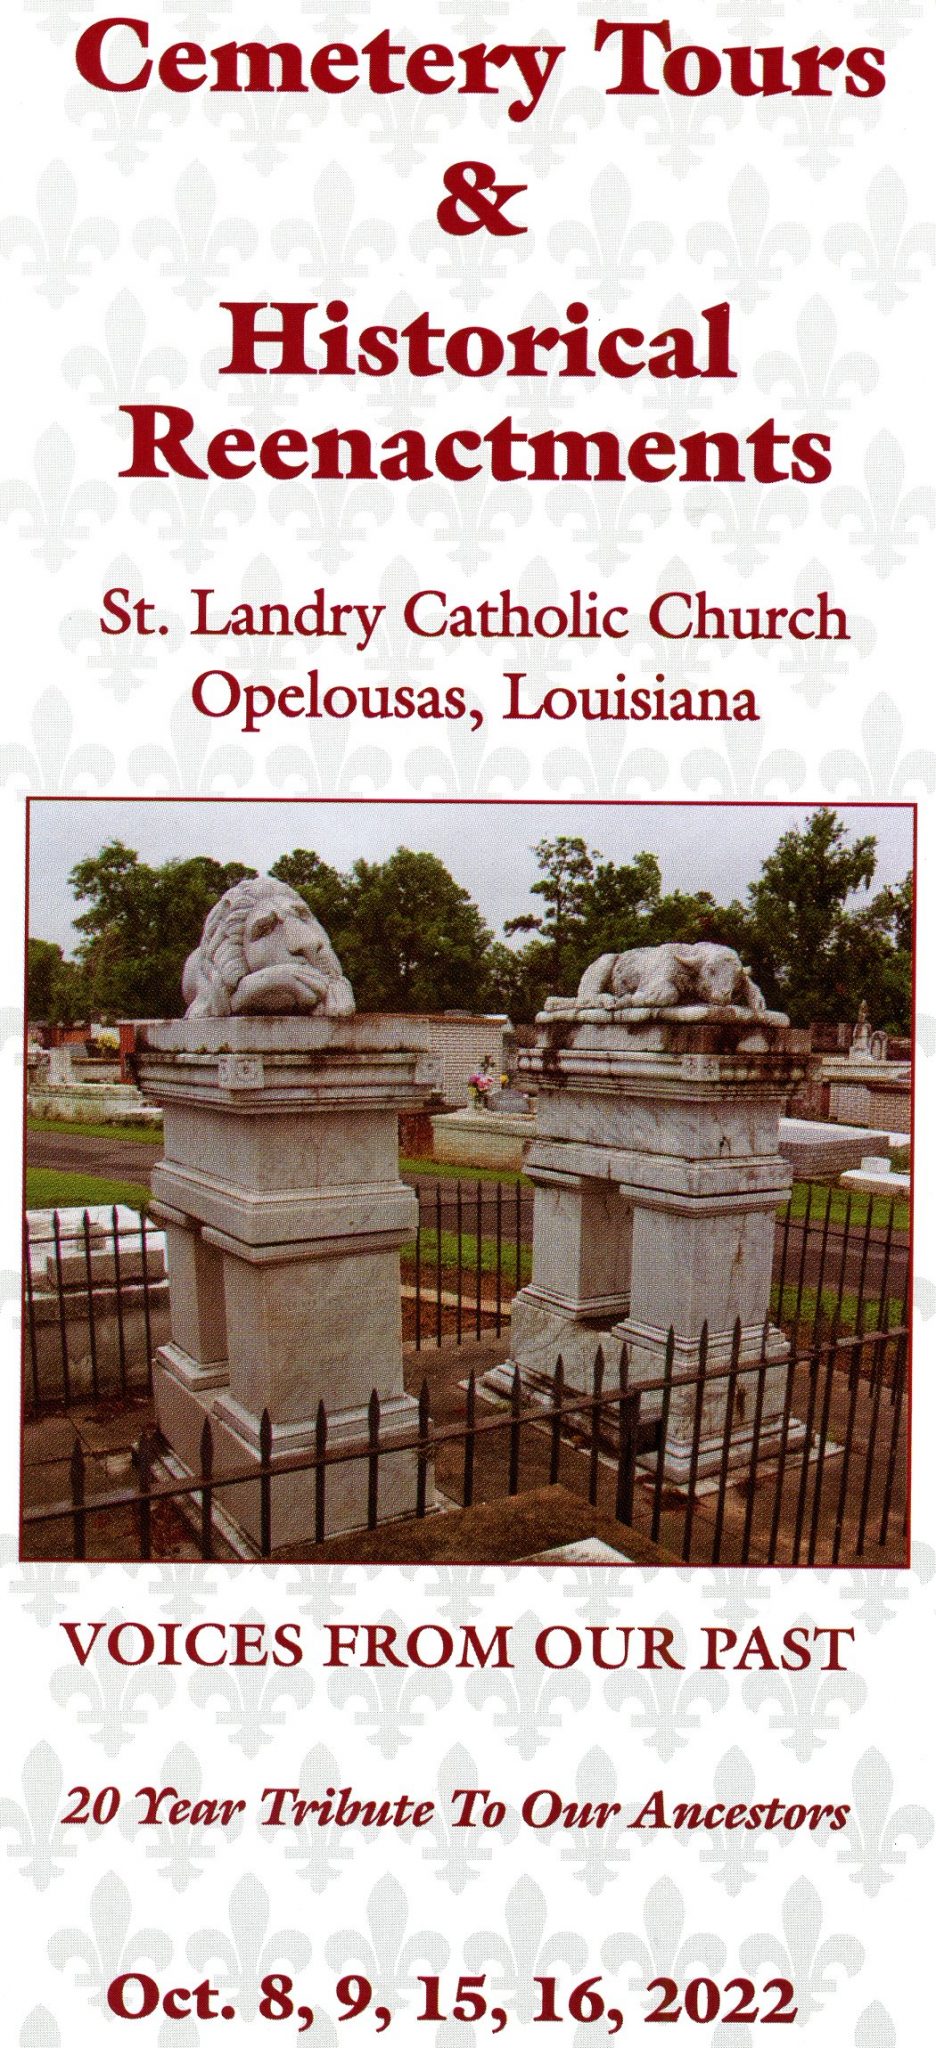 St. Landry Parish Catholic Church Voices of the Past Cemetery Tour